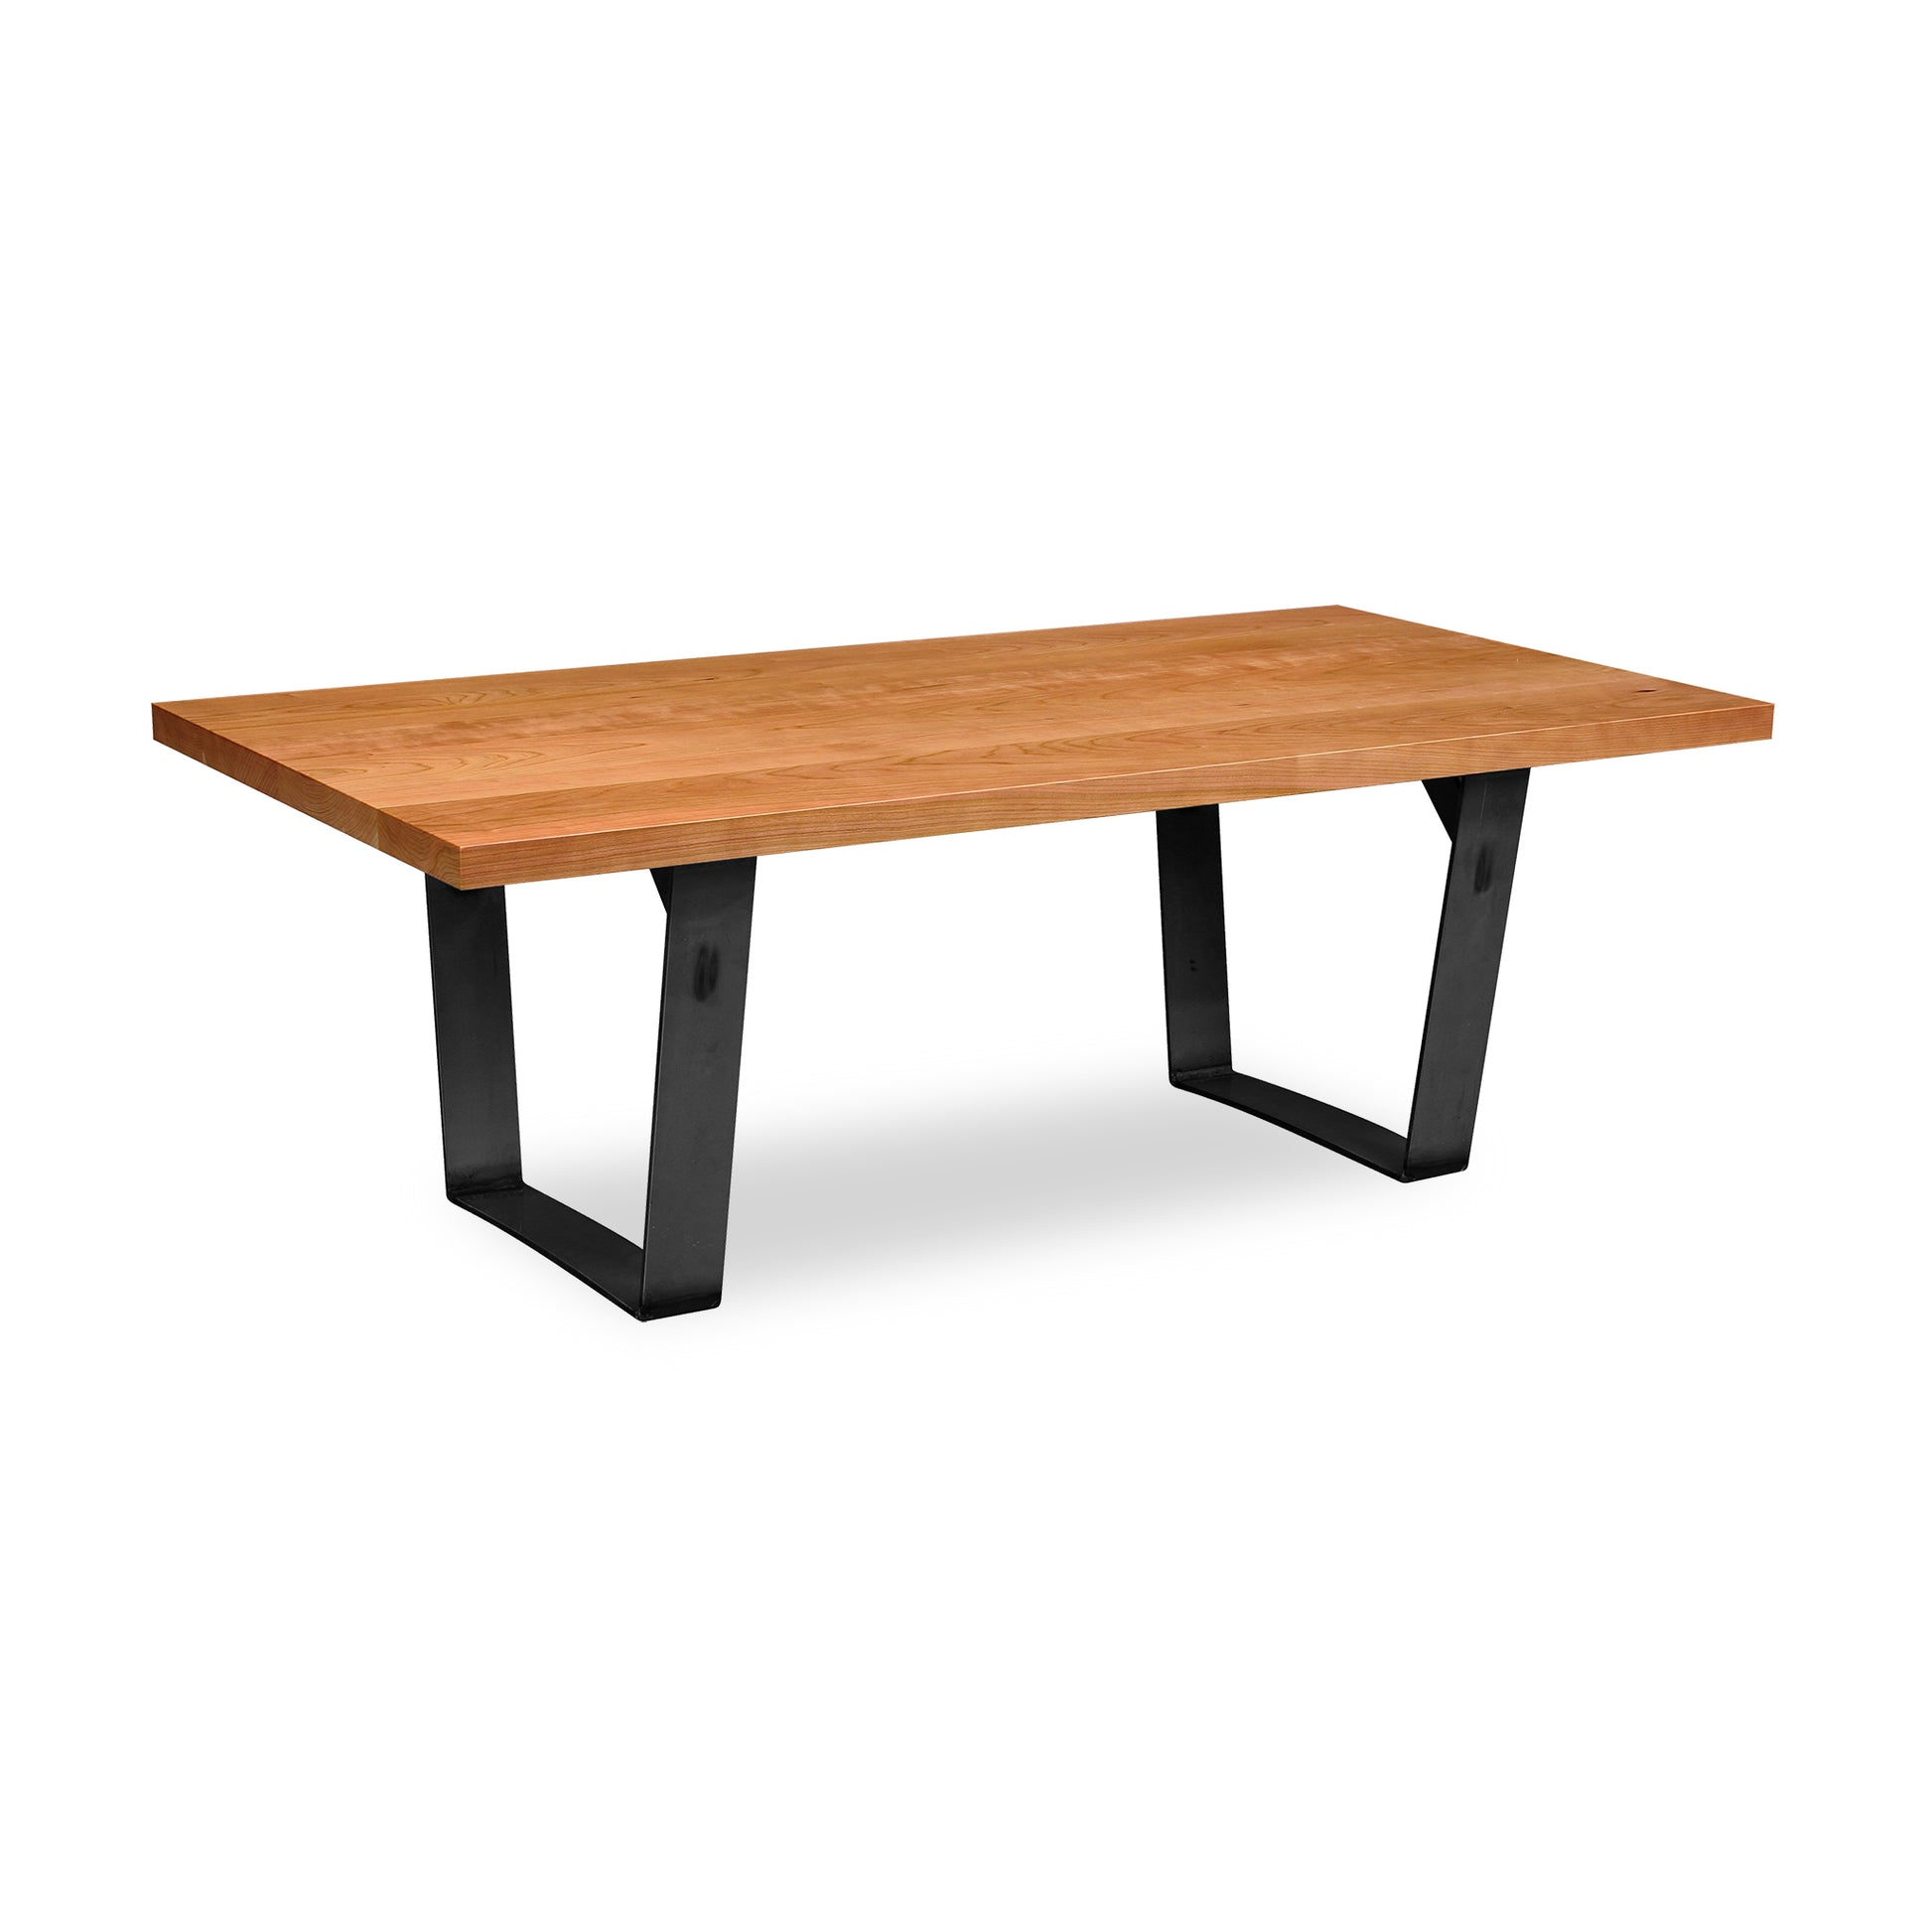 A modern design Metropolitan Coffee Table with black legs by Lyndon Furniture.